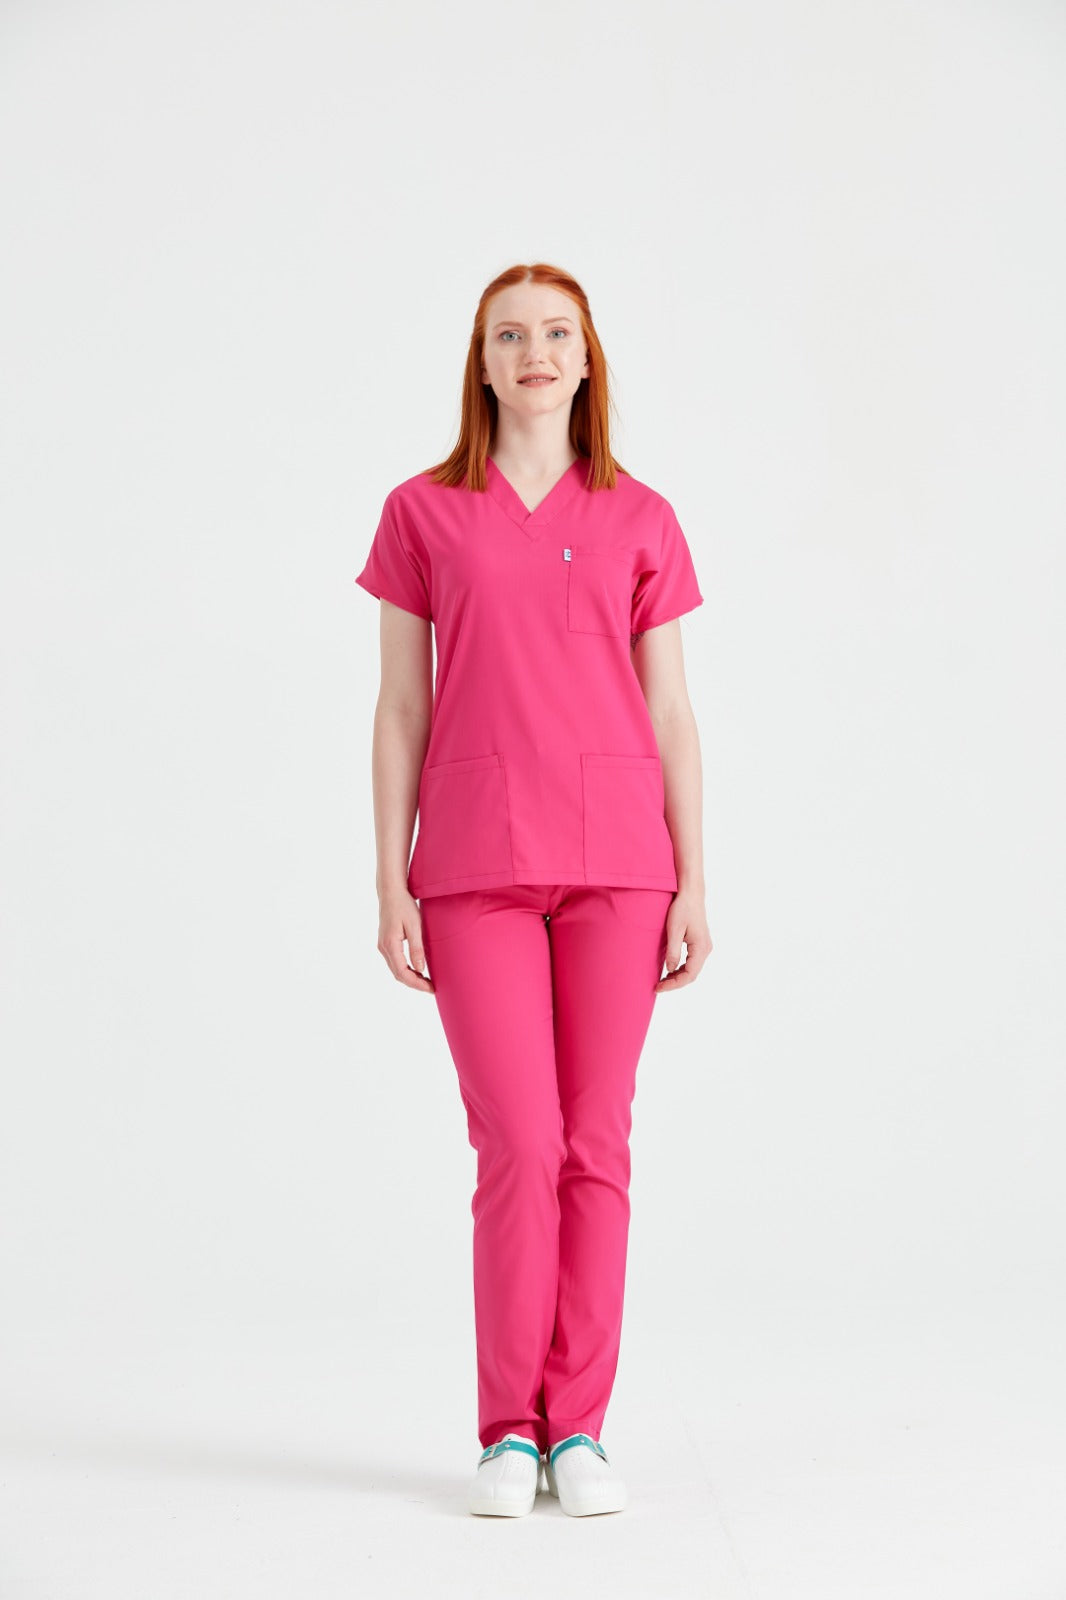 Asistenta medicala imbracata in costum elastan roz Fuchsia, vedere din spate